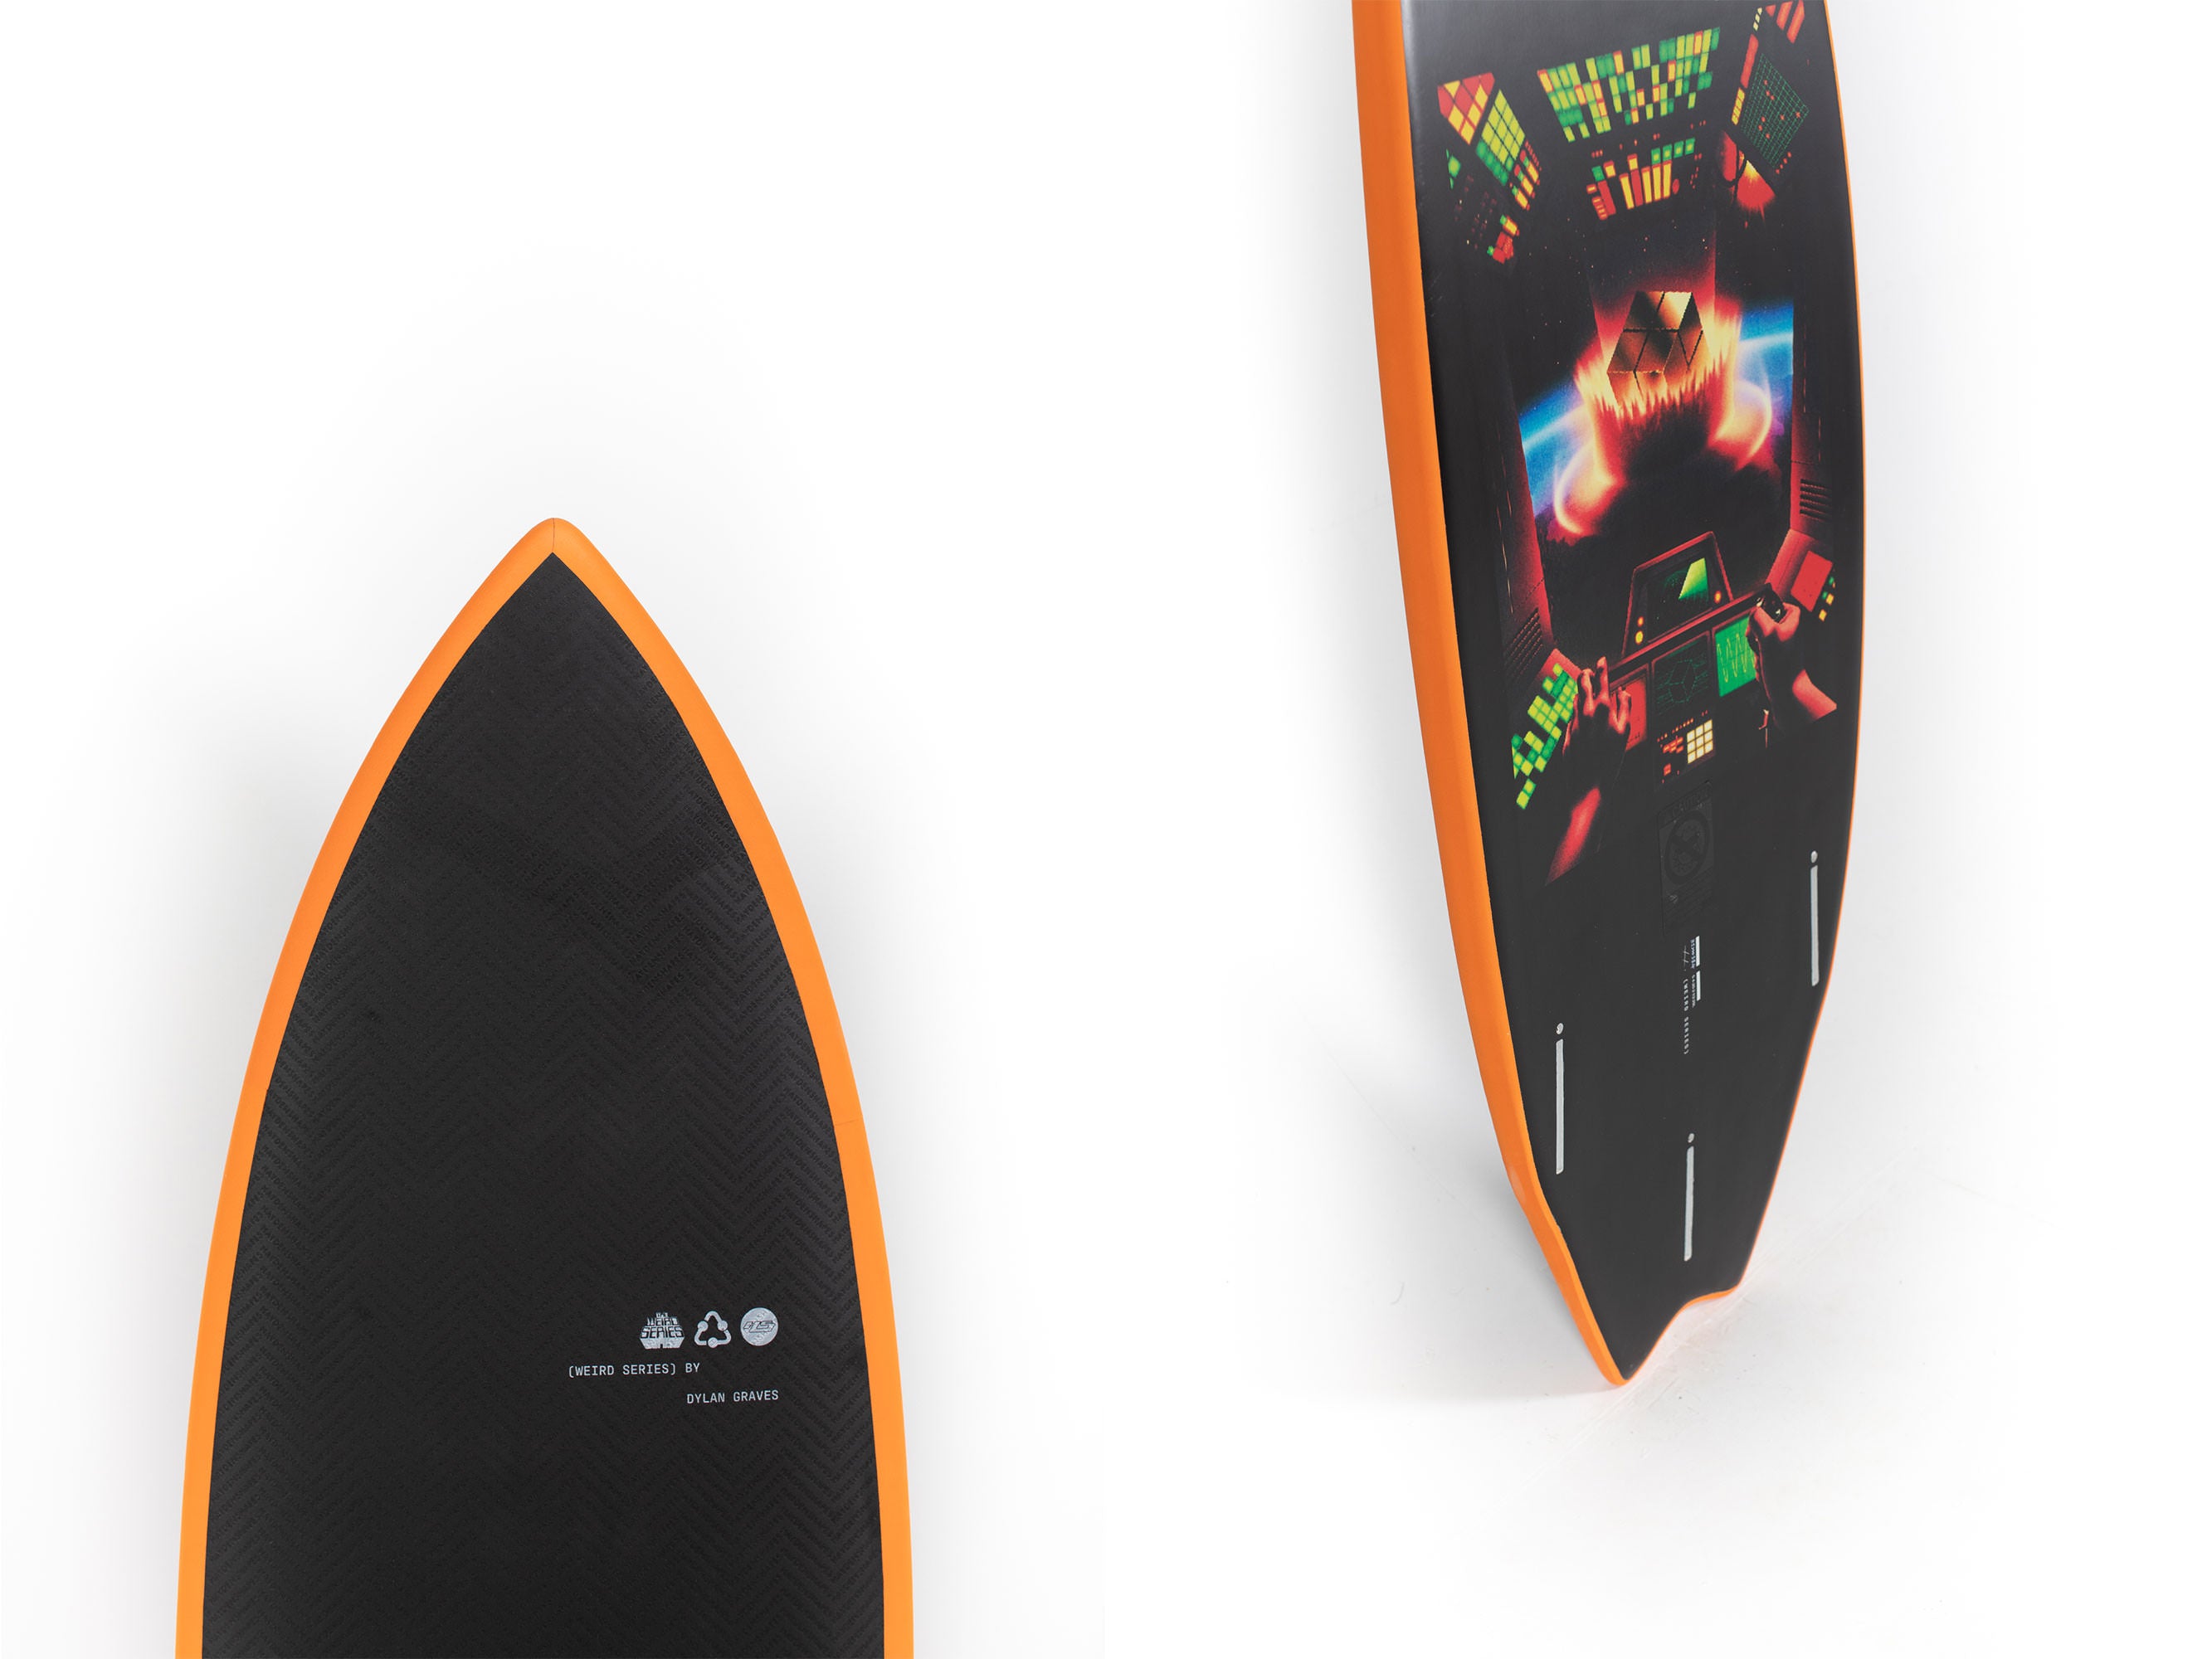 HaydenShapes Surfboard - WEIRD WAVES SOFT - 5'4" x 20" x 2 1/2" x 29L - ESOFTWSDG-FU